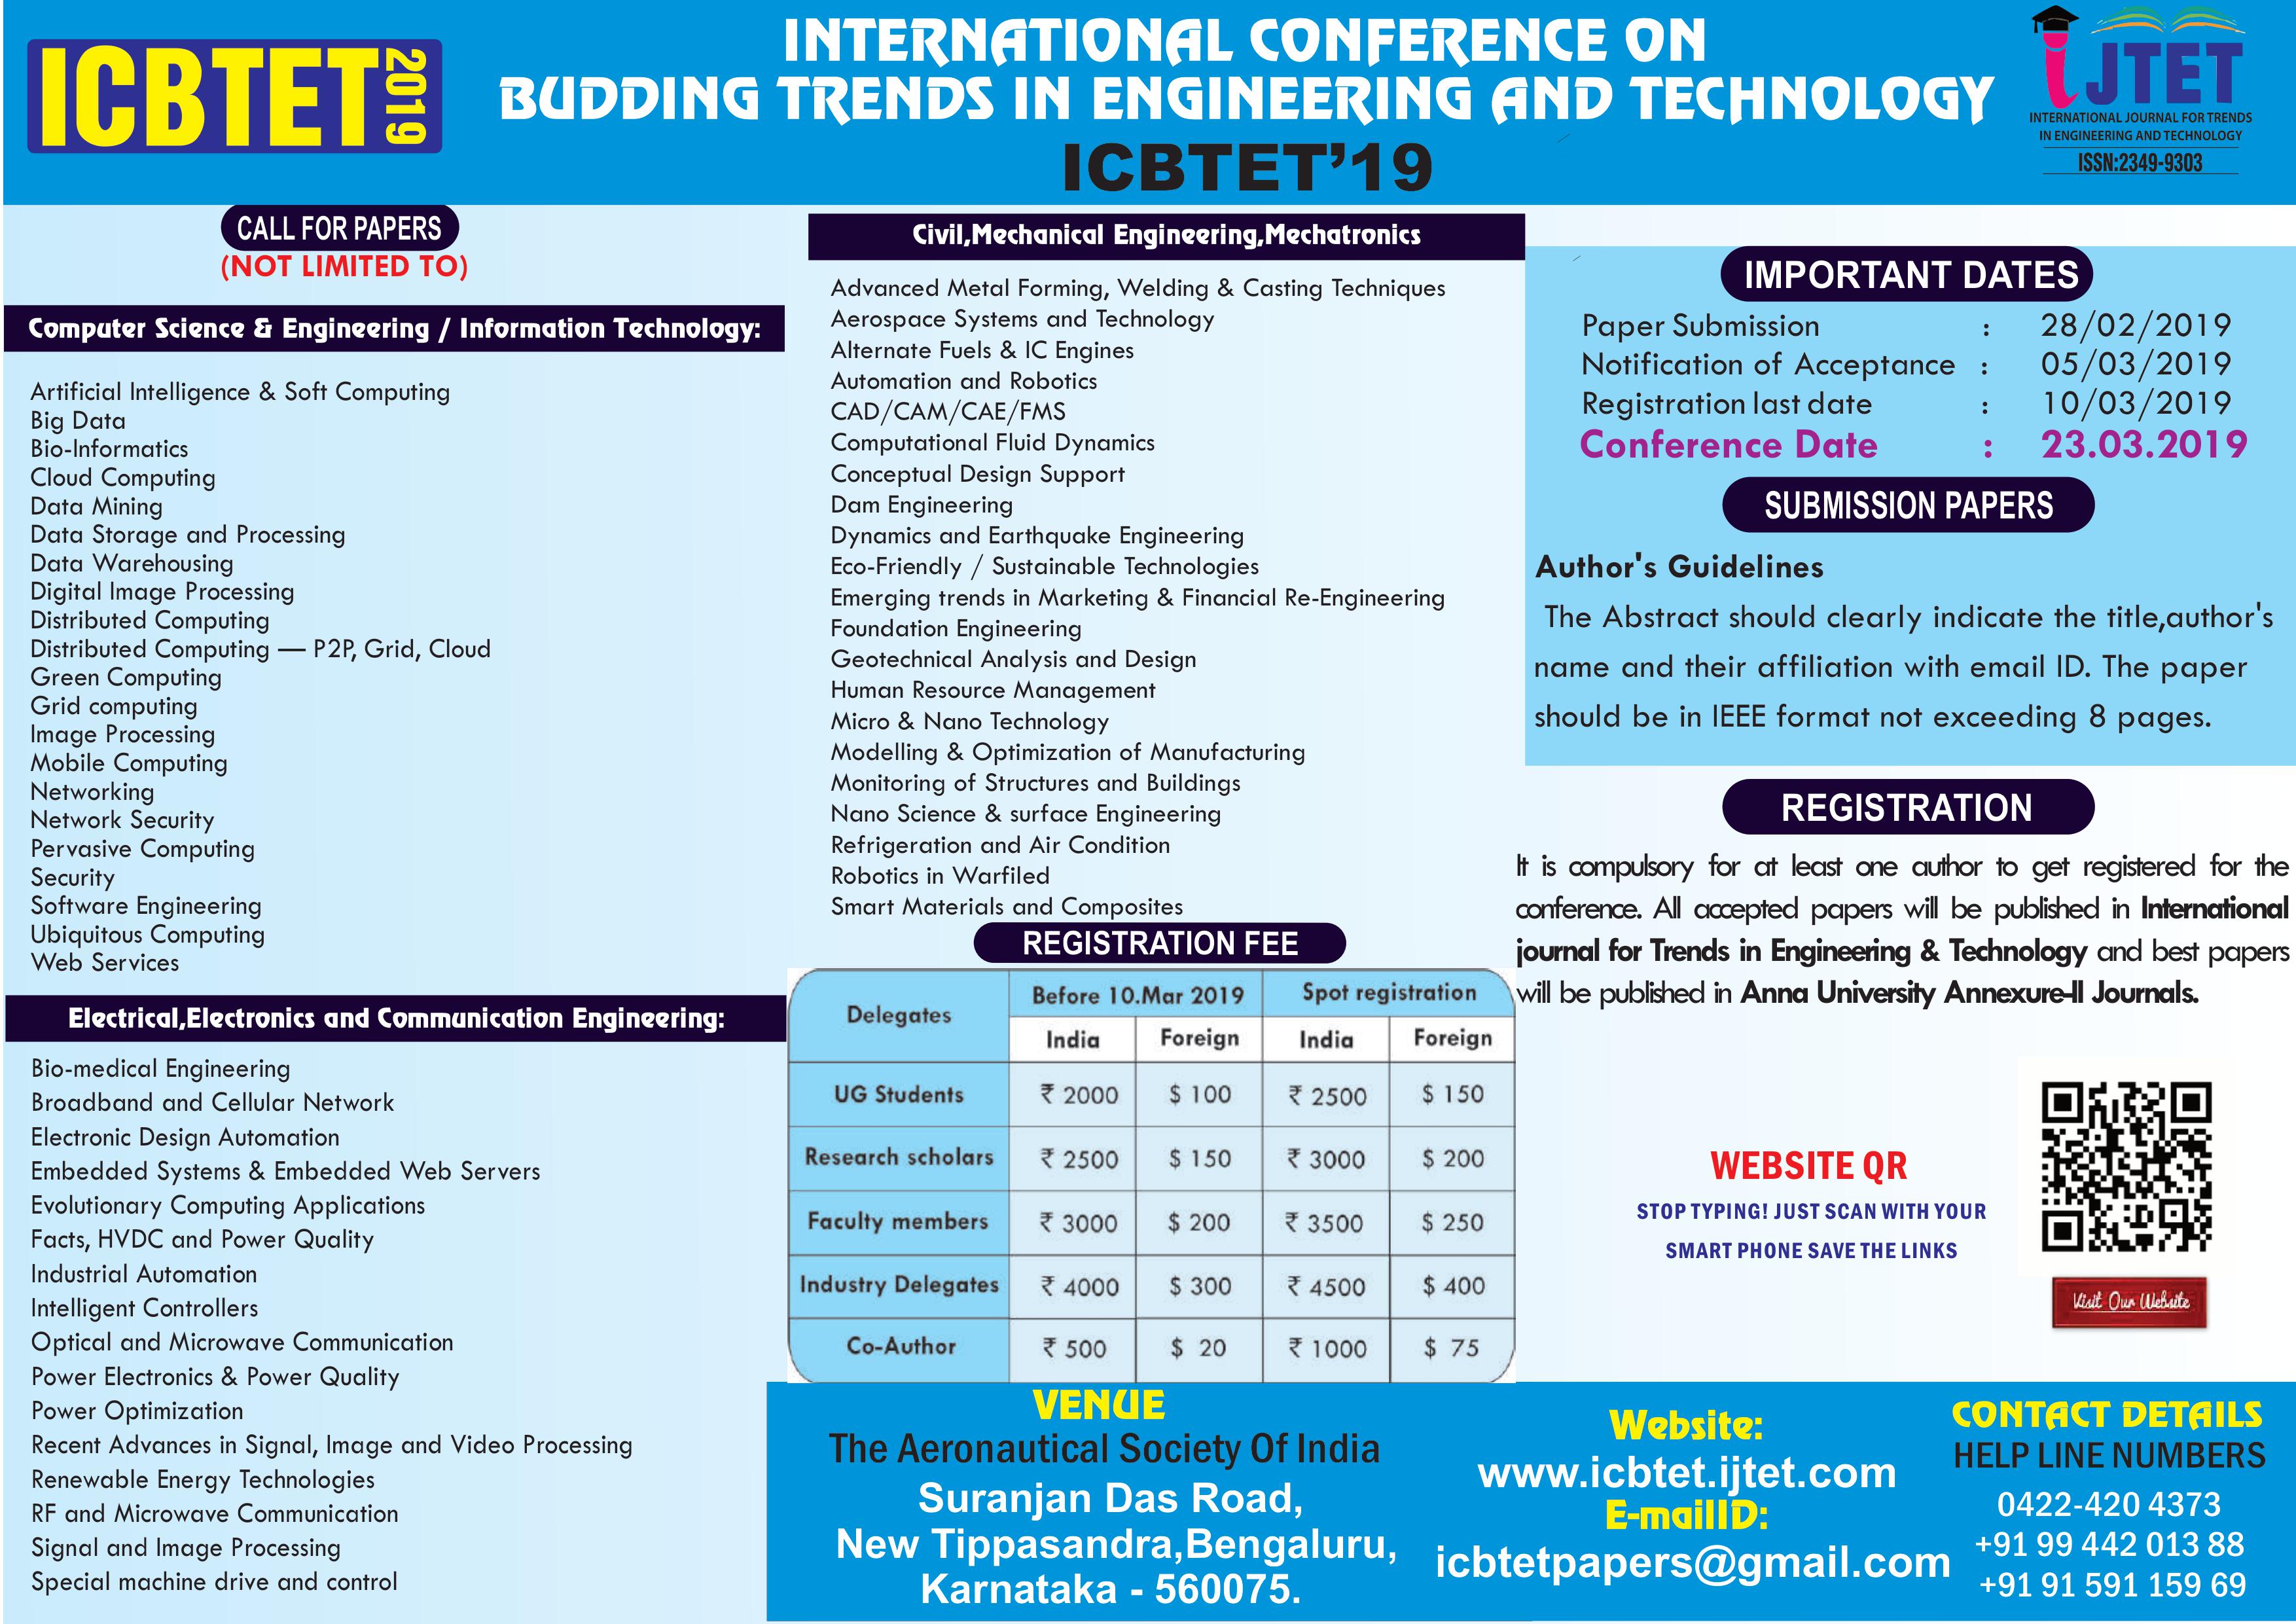 International Conference on Budding Trends in Engineering and Technology – ICBTET’19, Bangalore, Karnataka, India